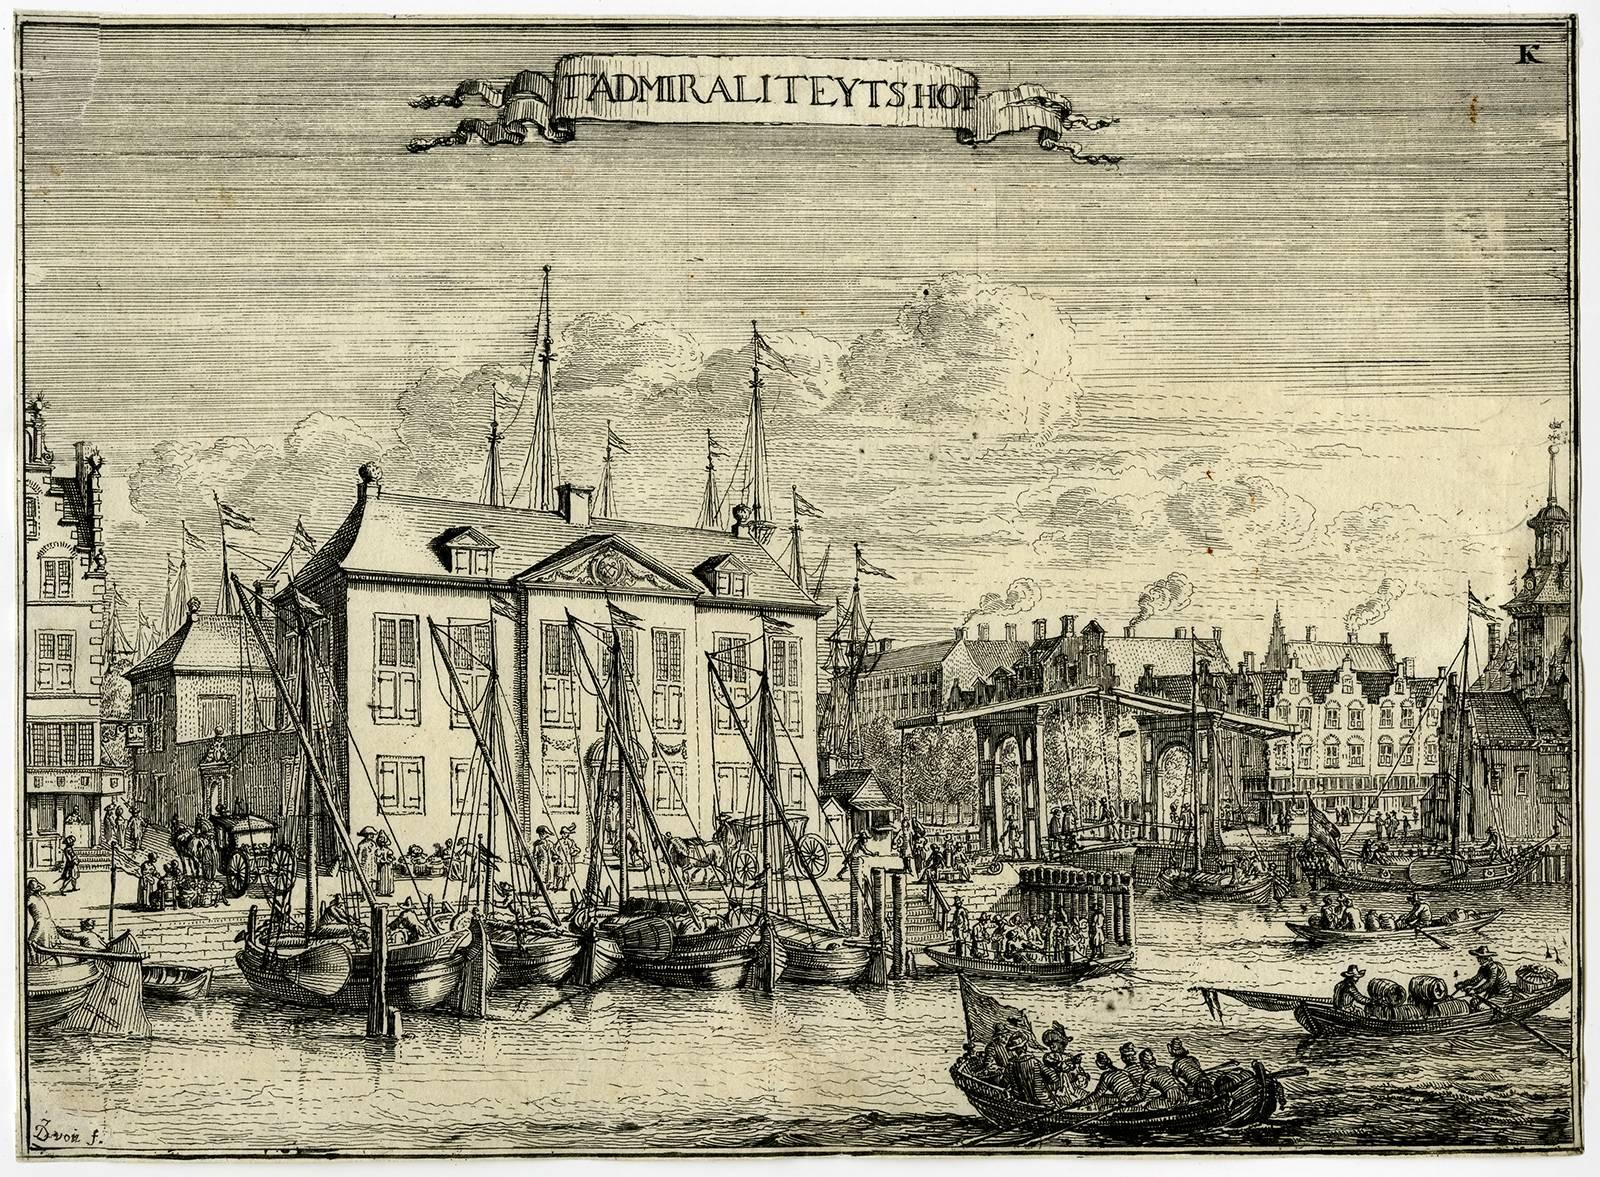 Johannes de Vou Landscape Print - T Admiraliteytshof - View of the Admiralty-Court in Rotterdam.